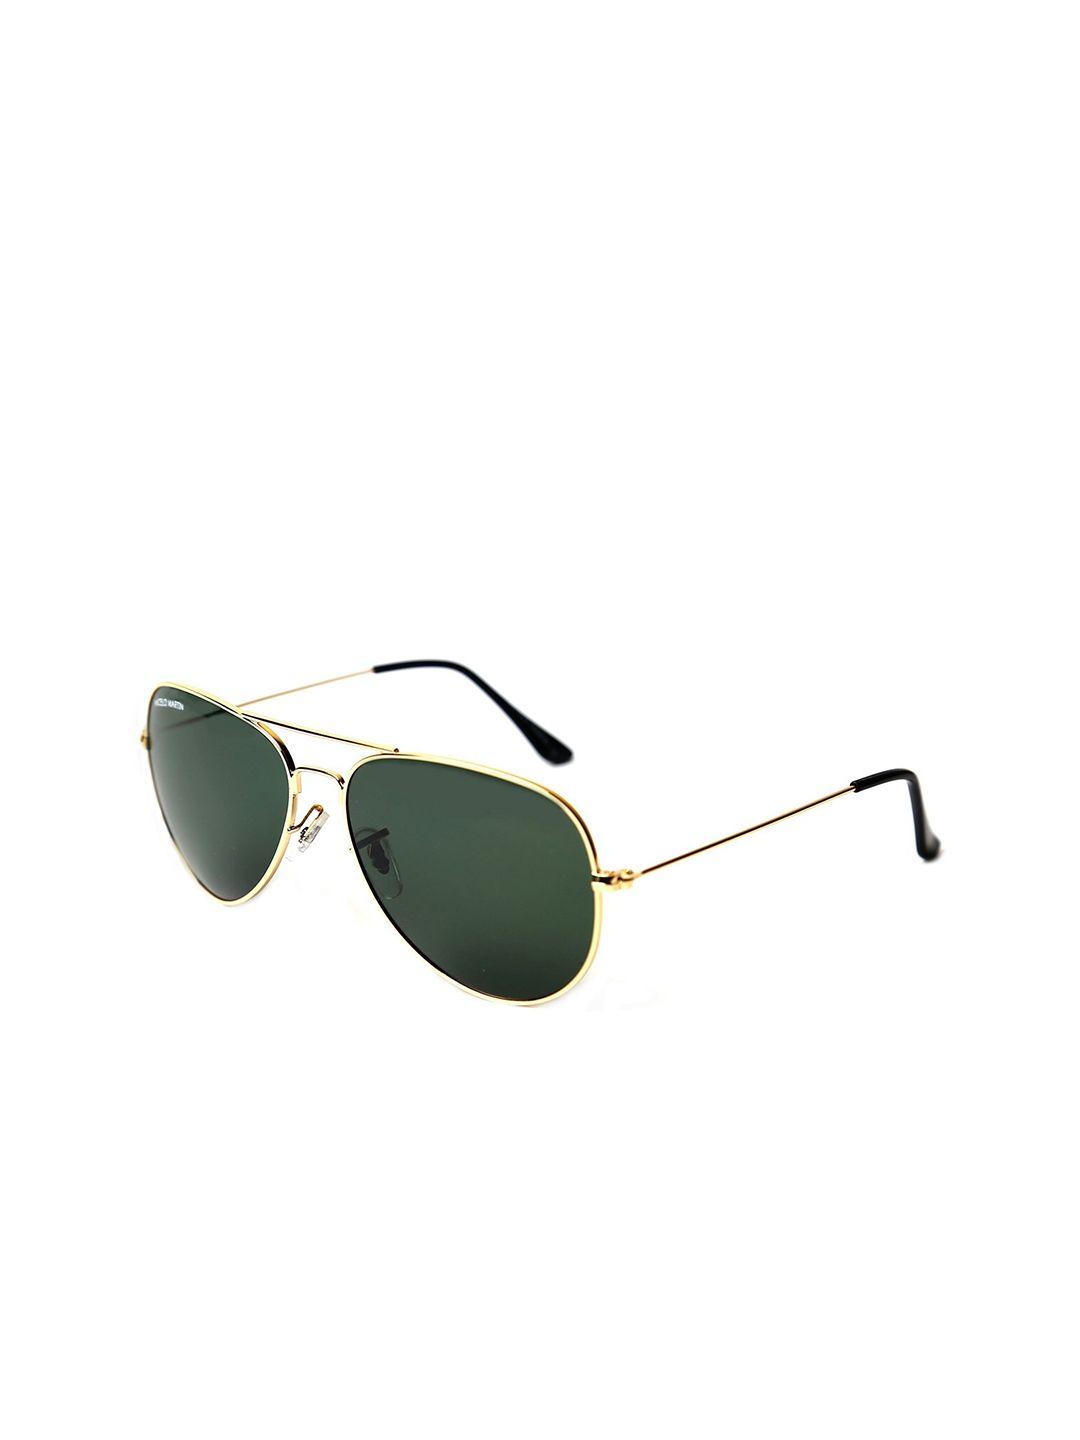 micelo-martin-unisex-green-uv-protected-oval-sunglasses-mm1001-c1